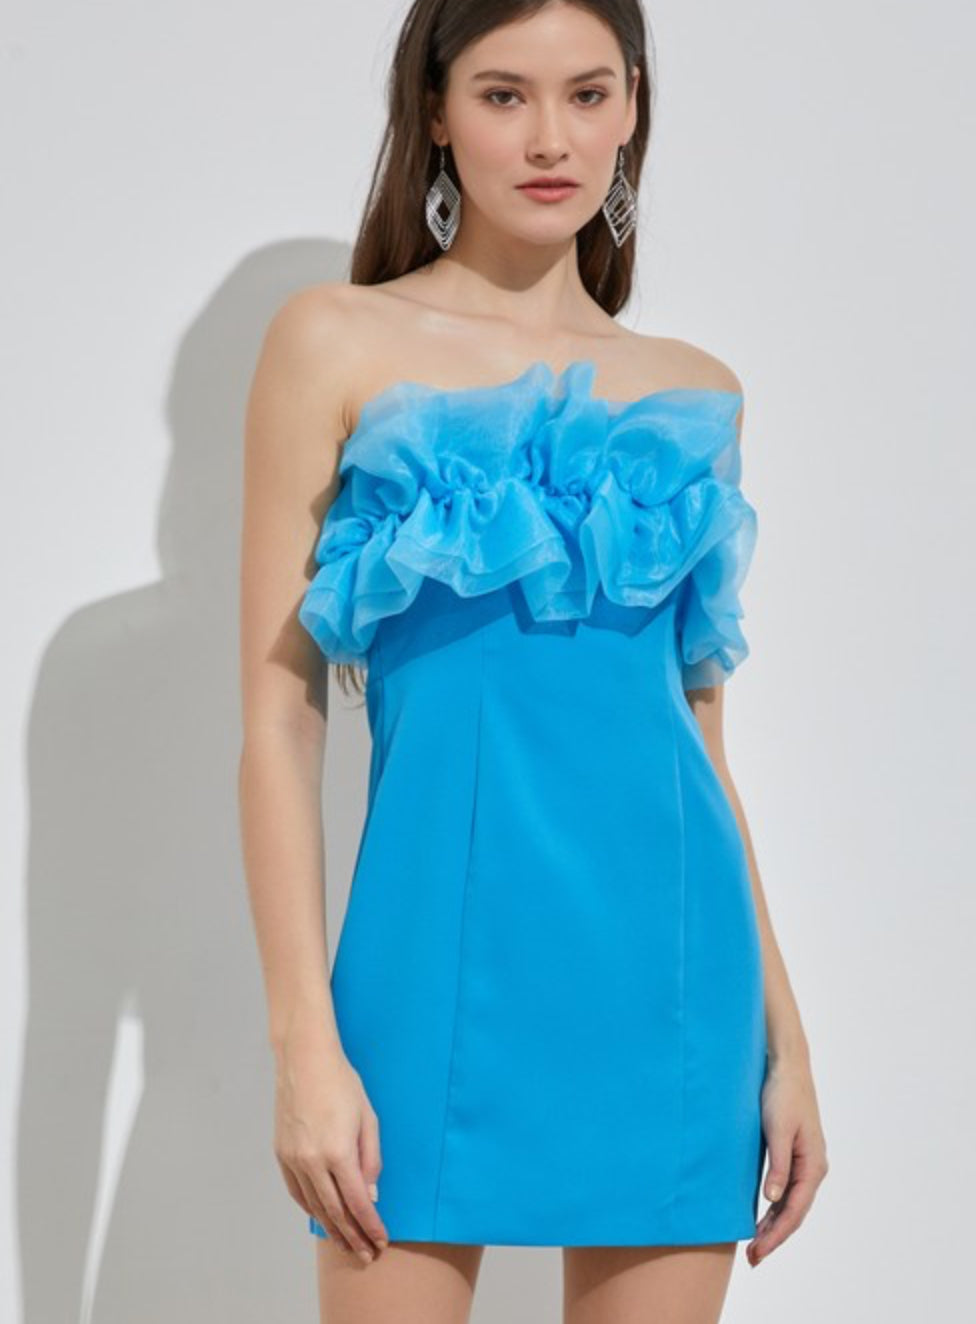 River blue strapless dress